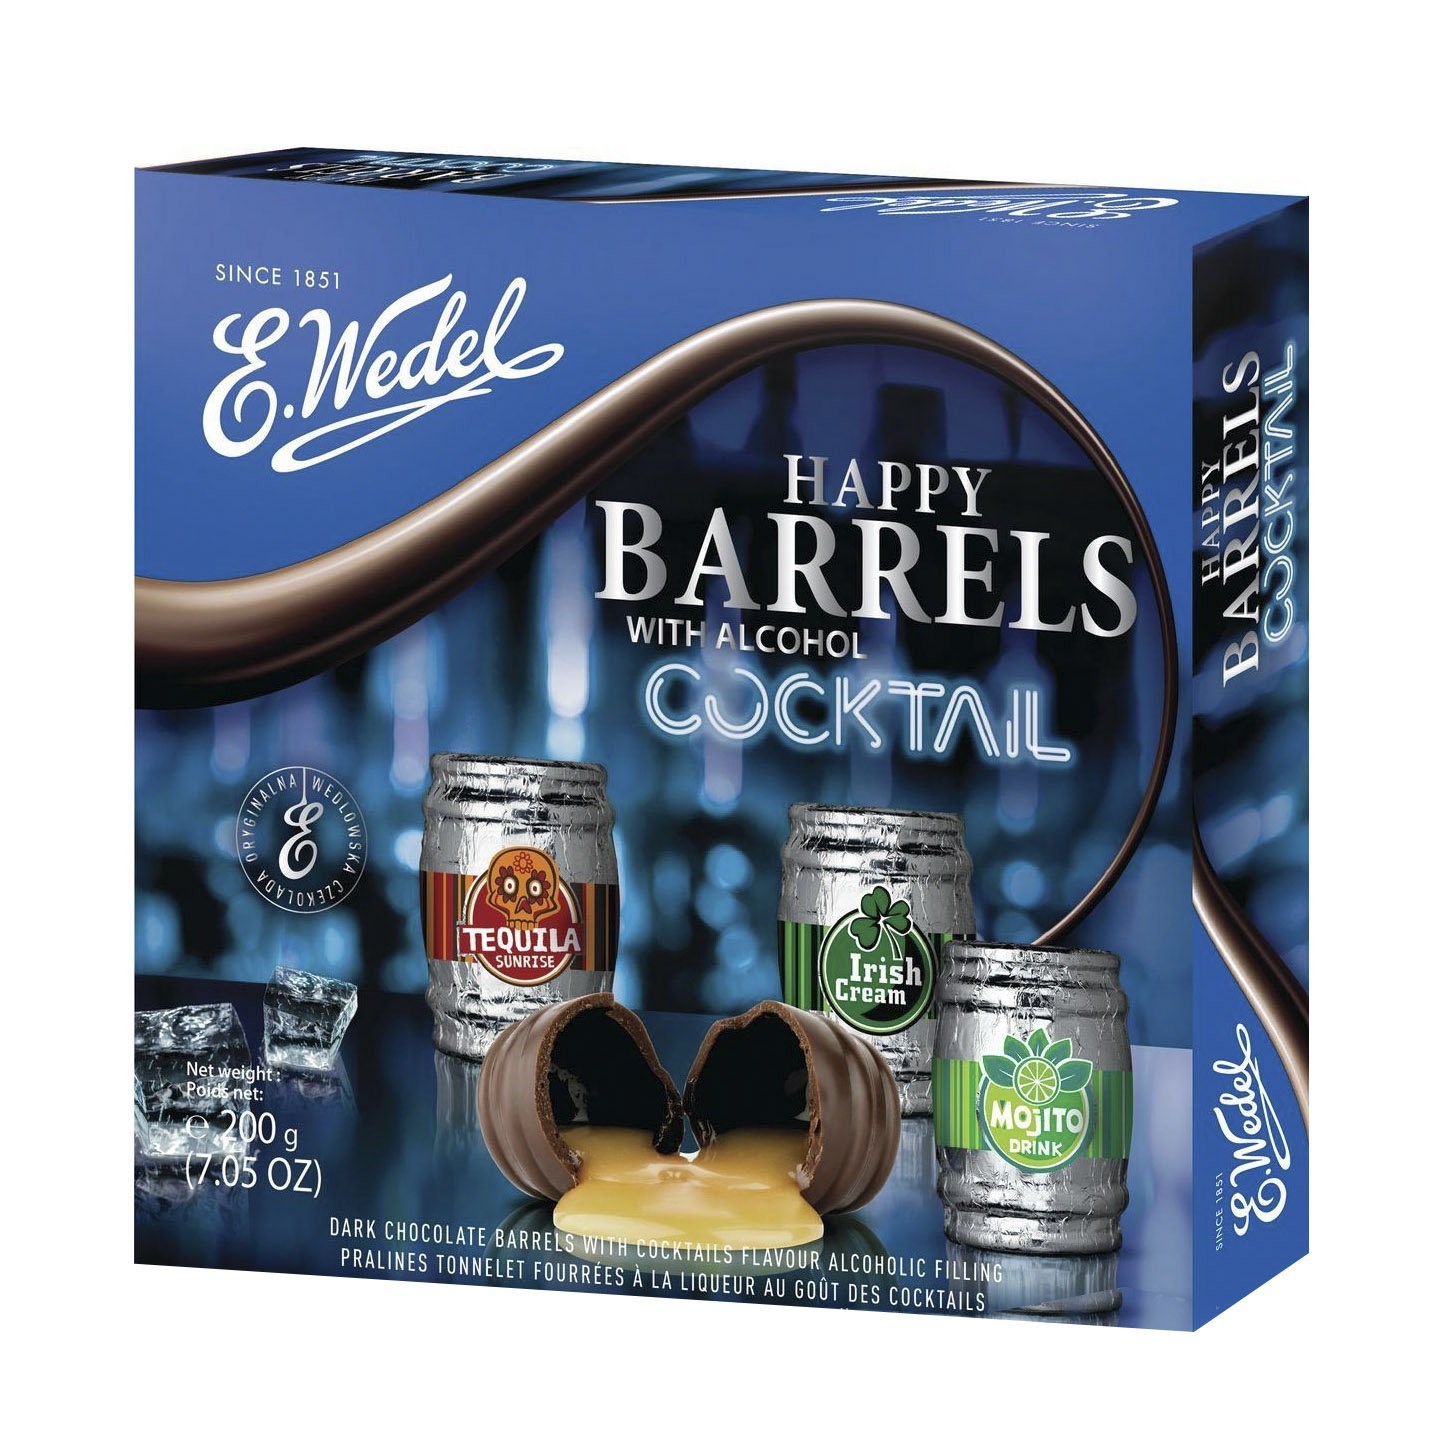 фото Набор шоколадных конфет e.wedel happy barrels cocktail с начинкой 200 г